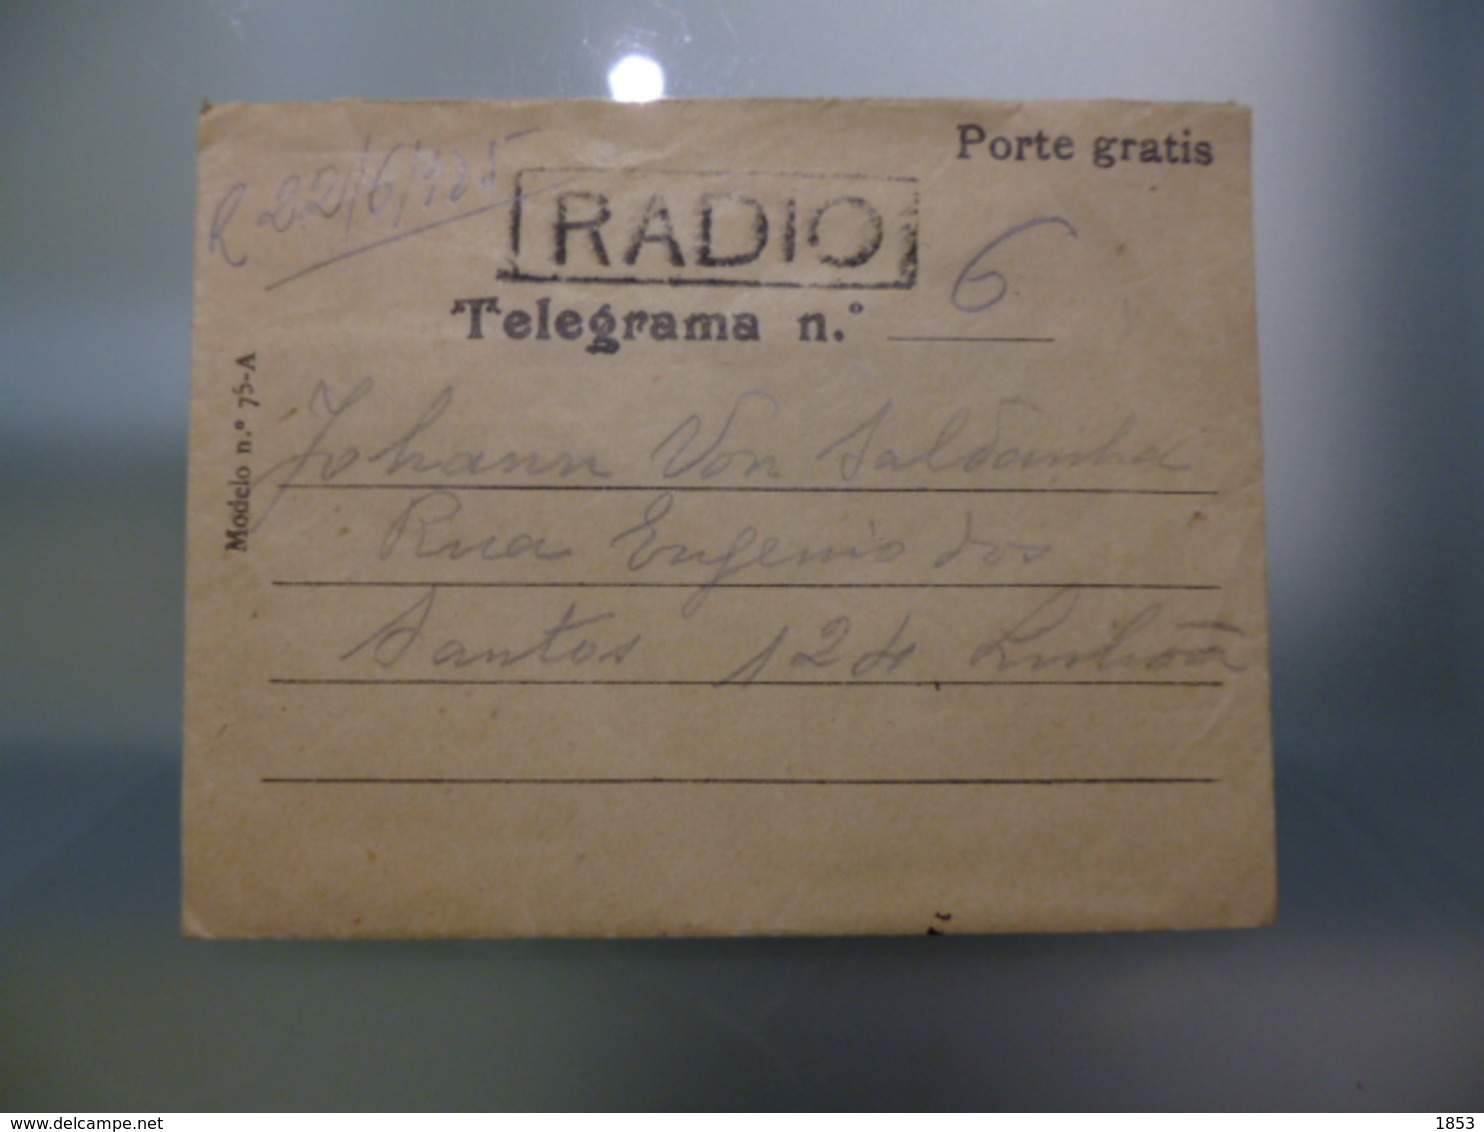 TELEGRAMA - PORTE GRATIS - VIA RÁDIO - Lettres & Documents